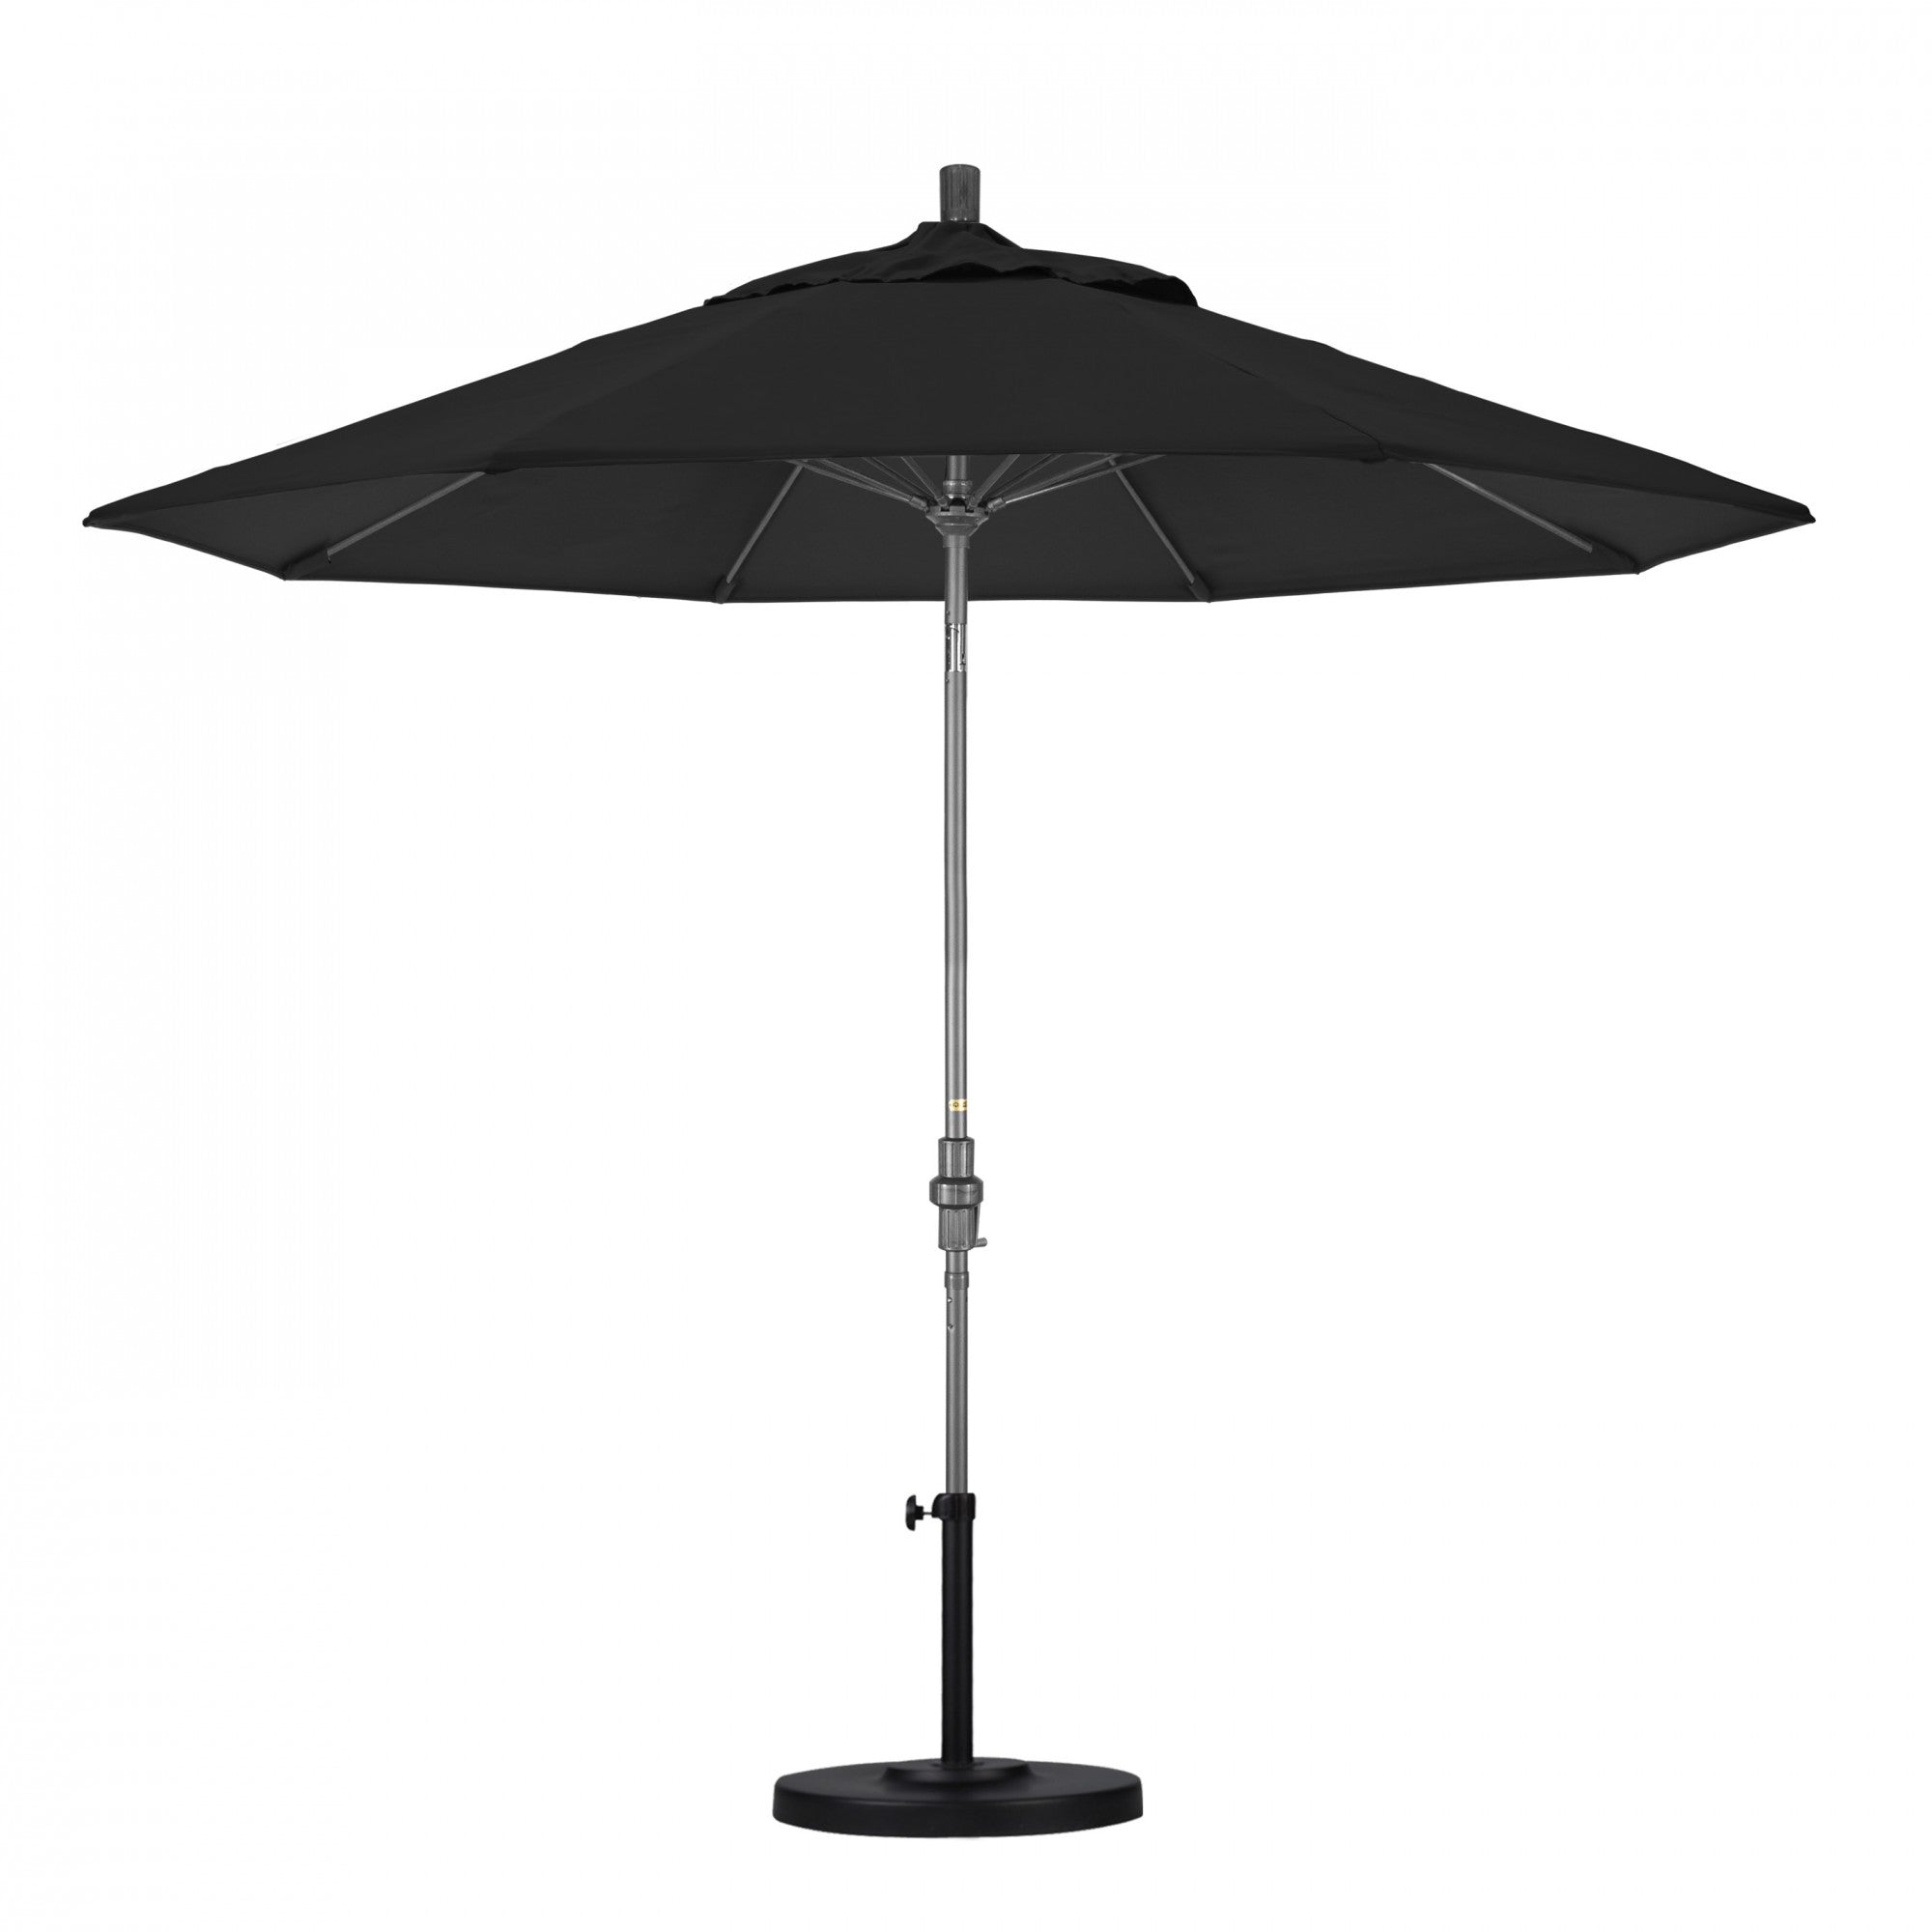 California Umbrella - 9' - Patio Umbrella Umbrella - Aluminum Pole - Black - Sunbrella  - GSCUF908010-5408